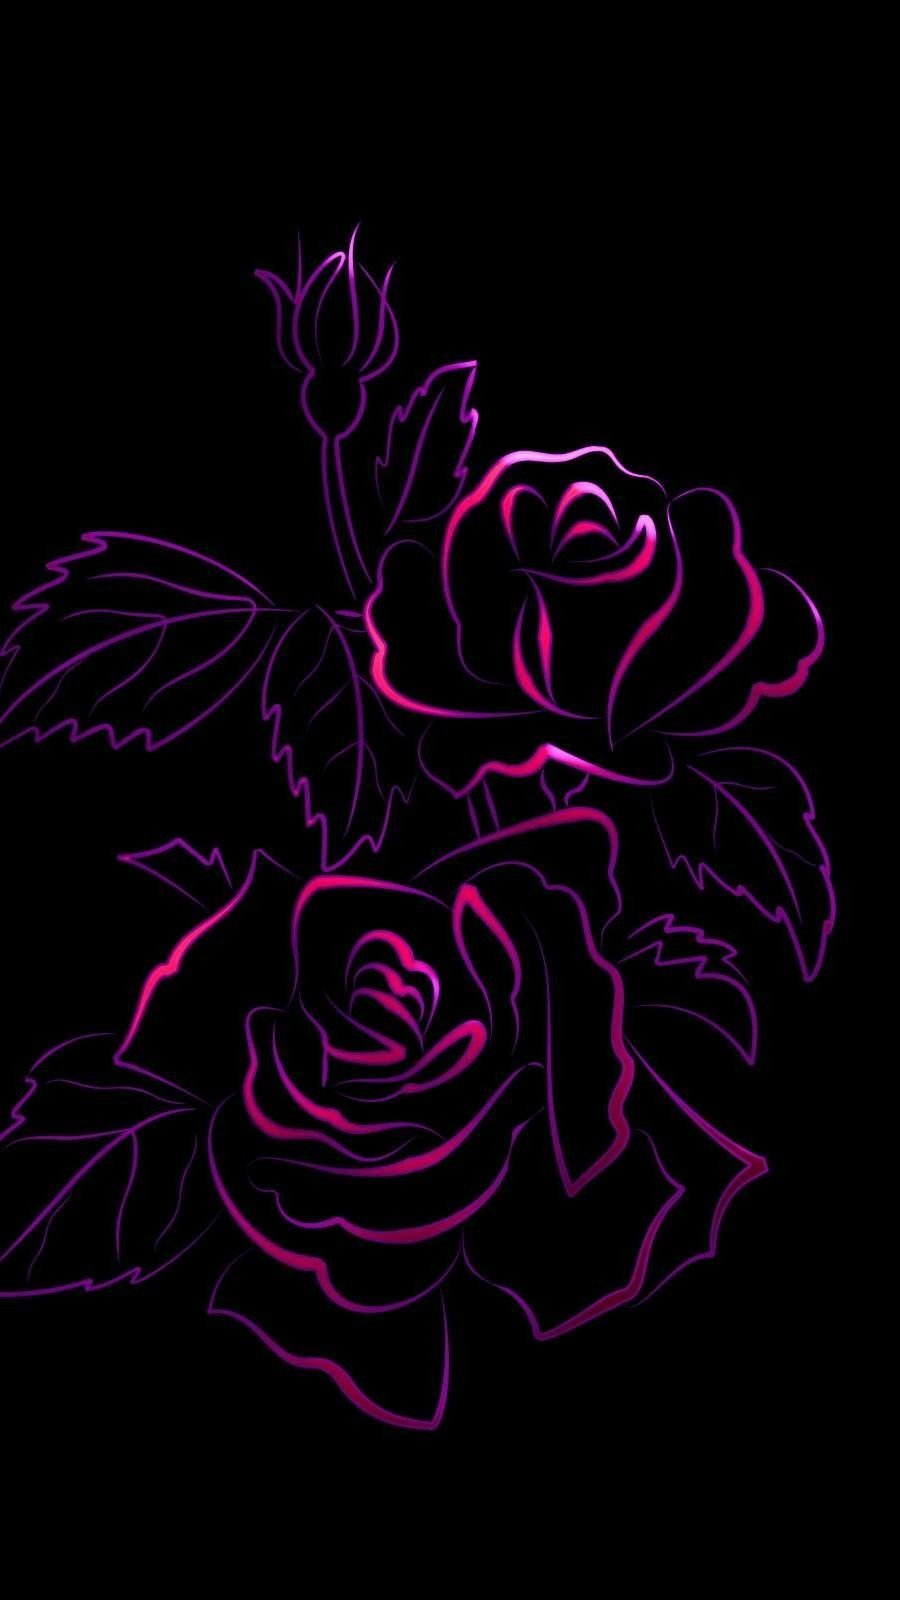 Neon rose Wallpapers Download